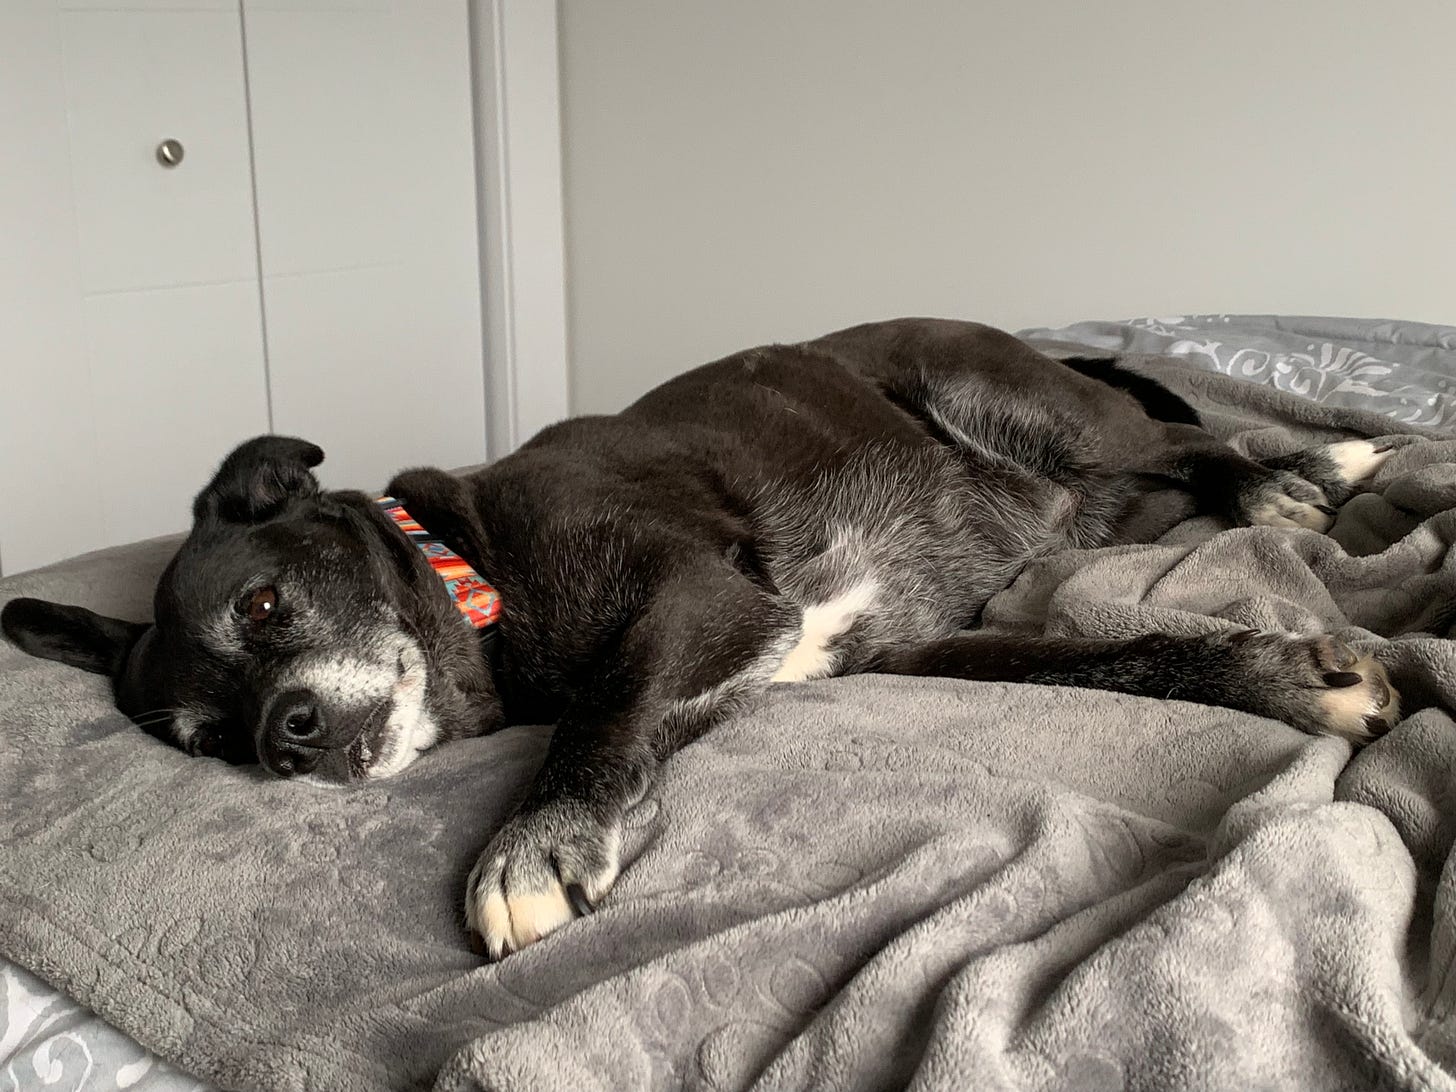 Black and white senior dog lying on grey blanket on bed